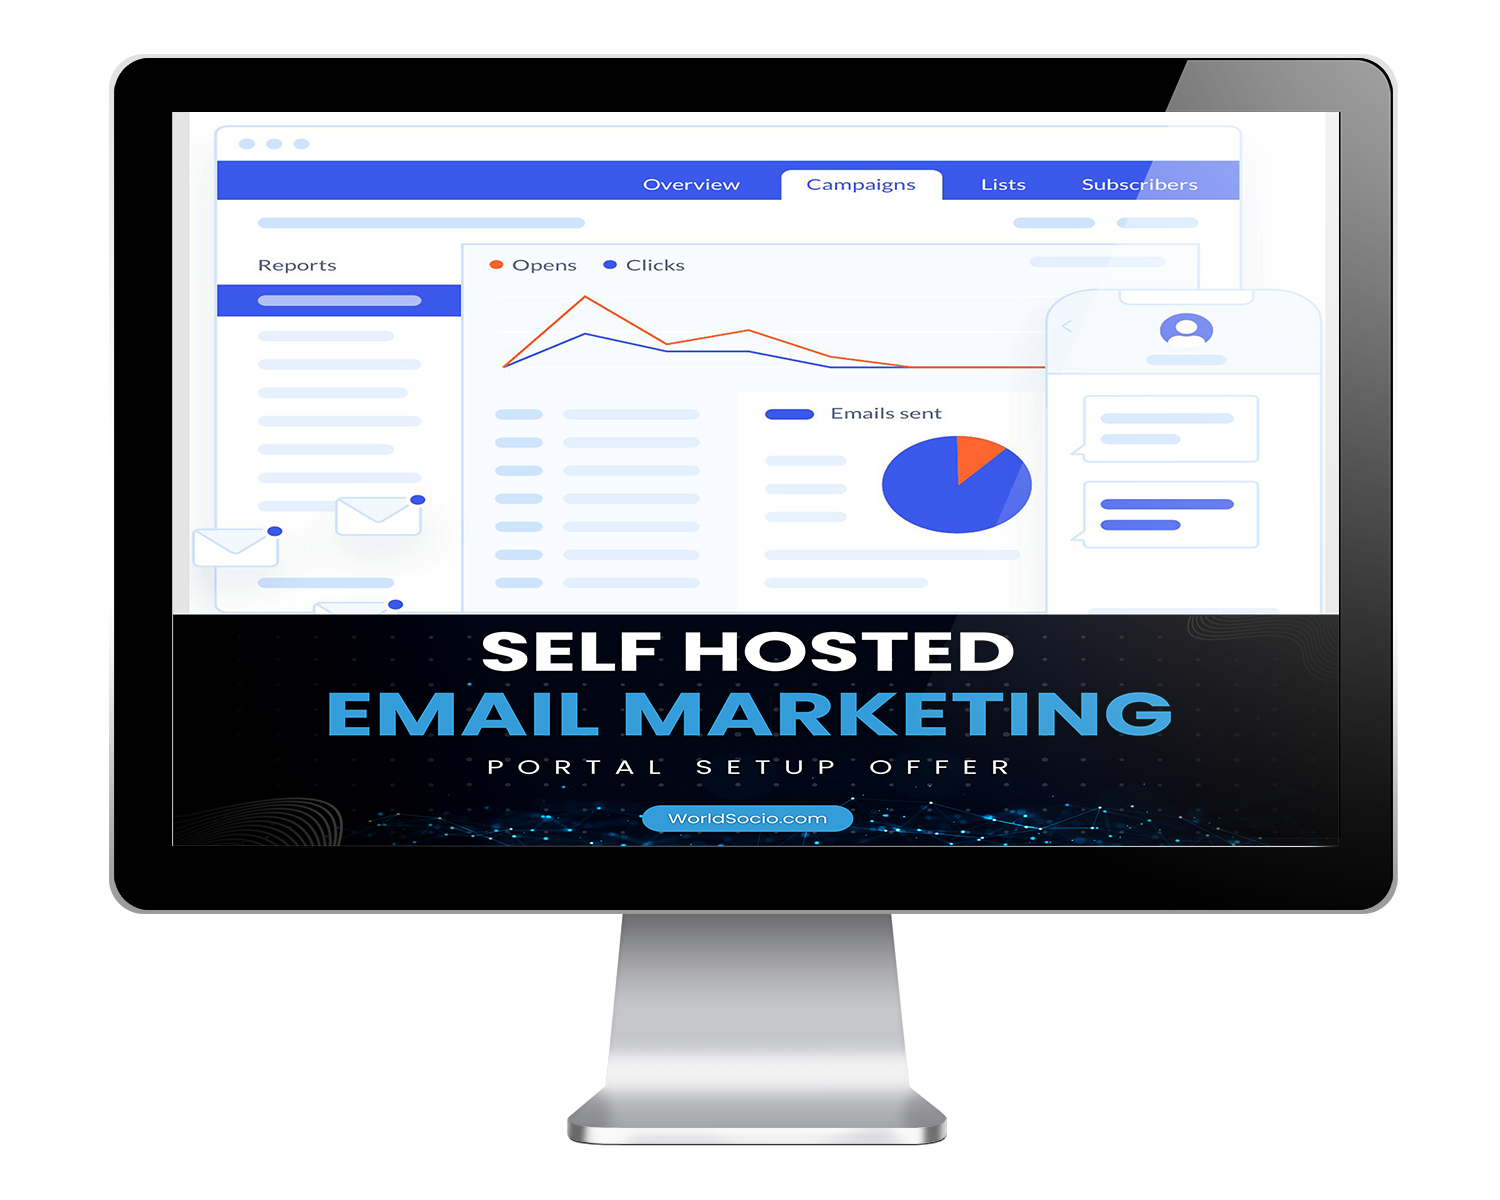 get-a-self-hosted-email-marketing-portal-setup-offer-2-png.1262